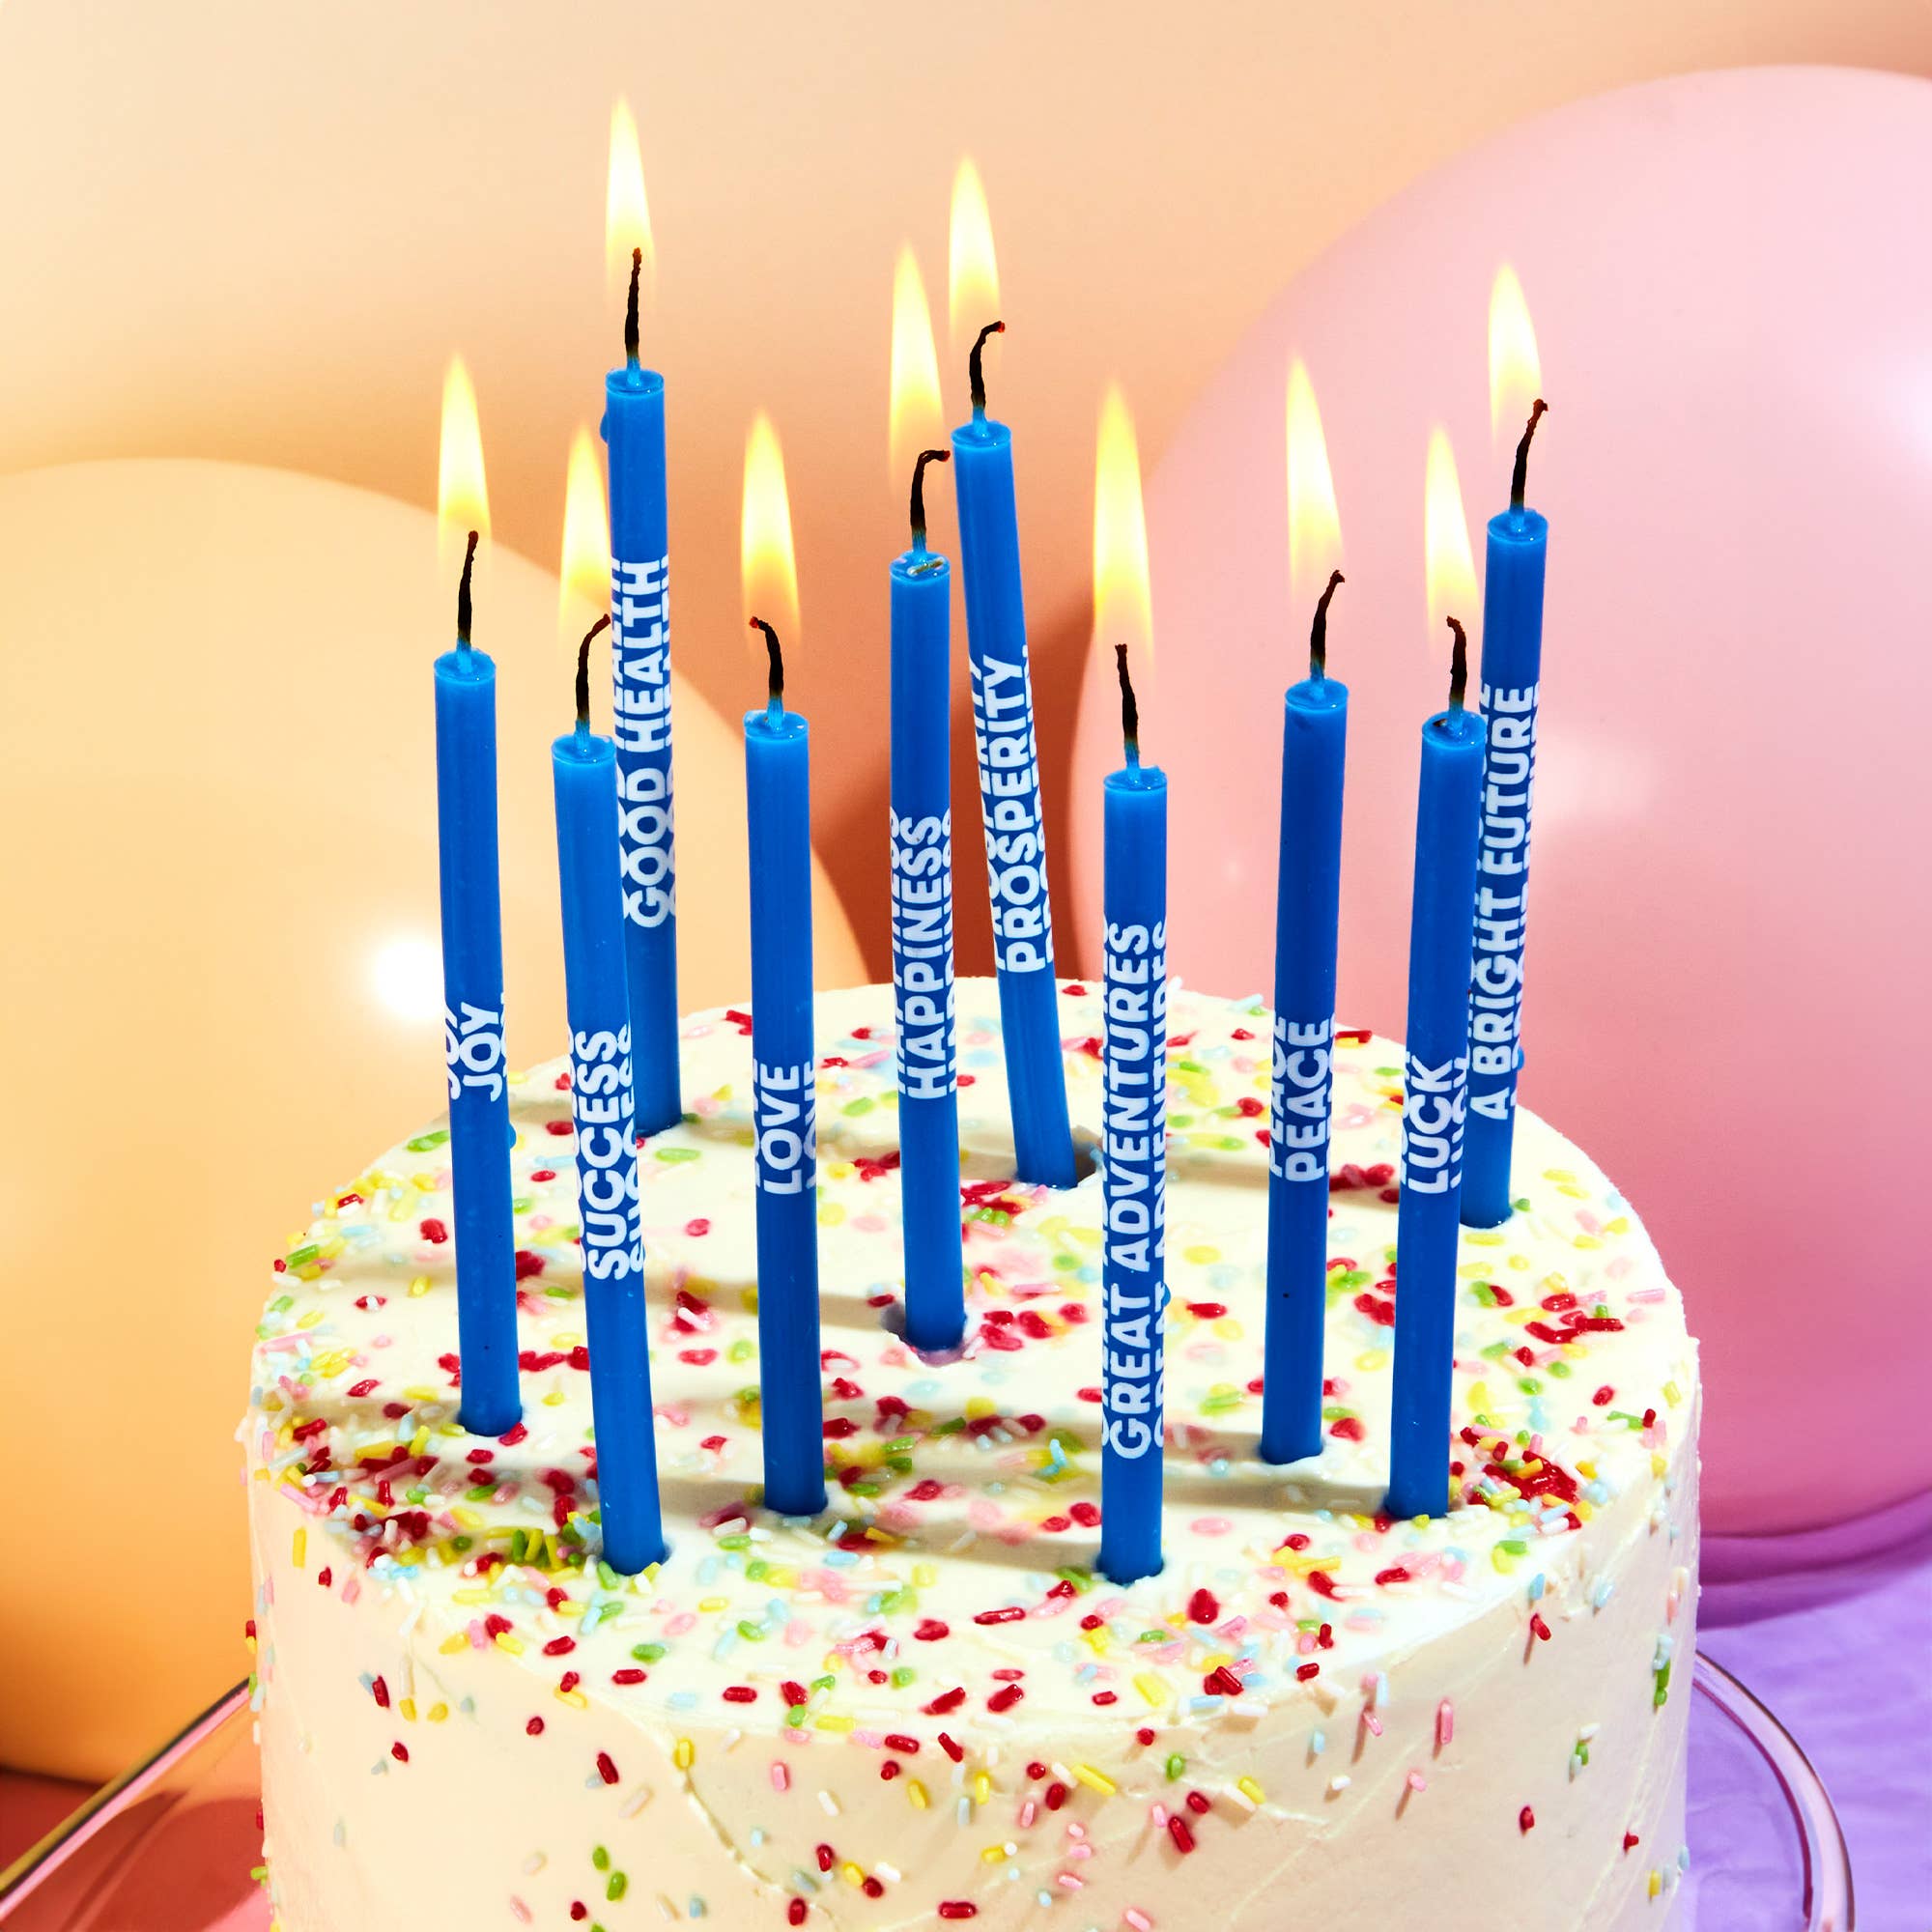 Wishing You: Birthday Candles - Pink